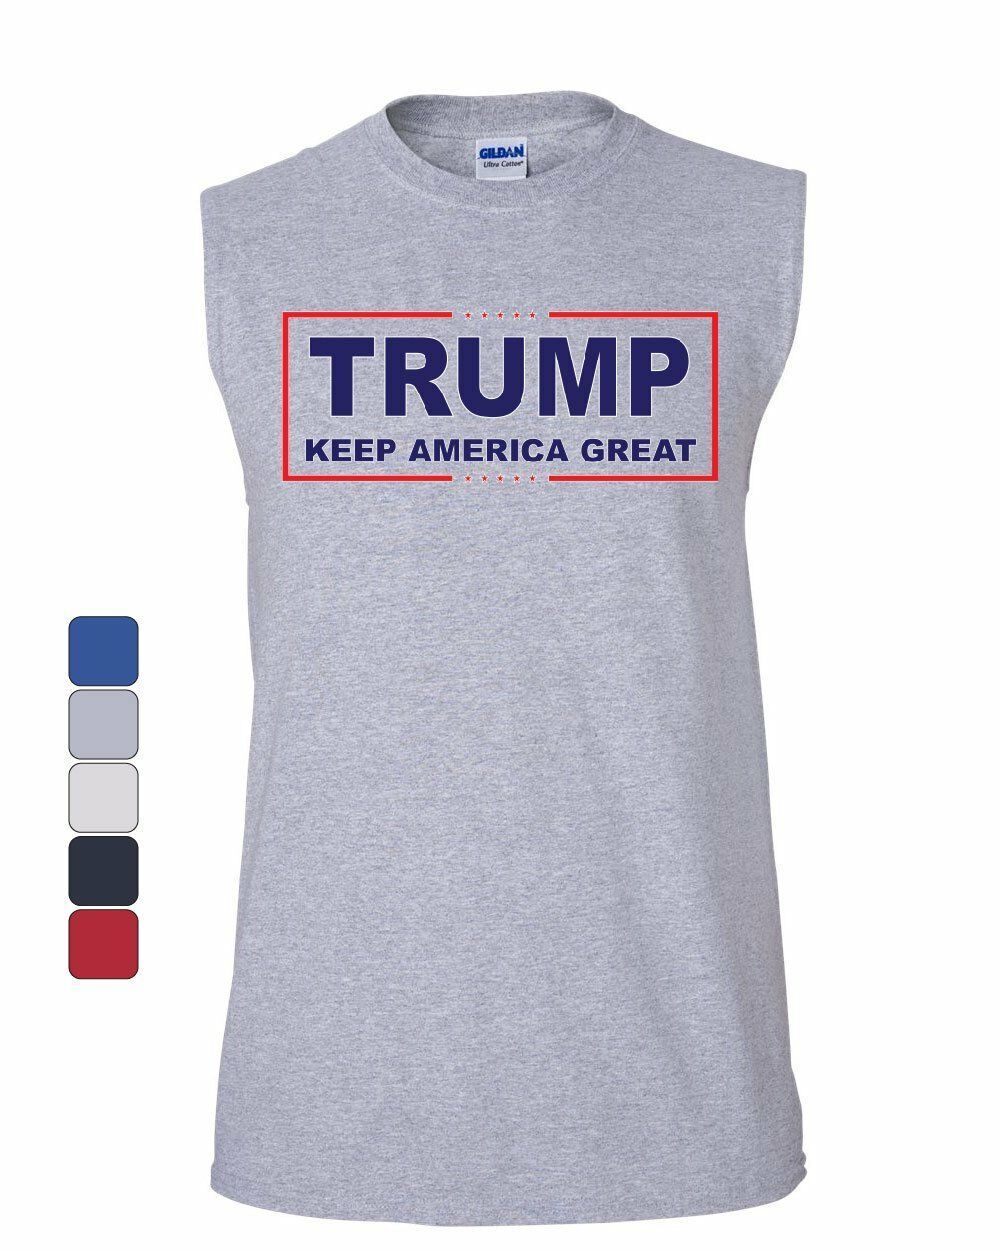 Trump Keep America Great Muscle Shirt 2020 Election Republican POTUS Sleeveless